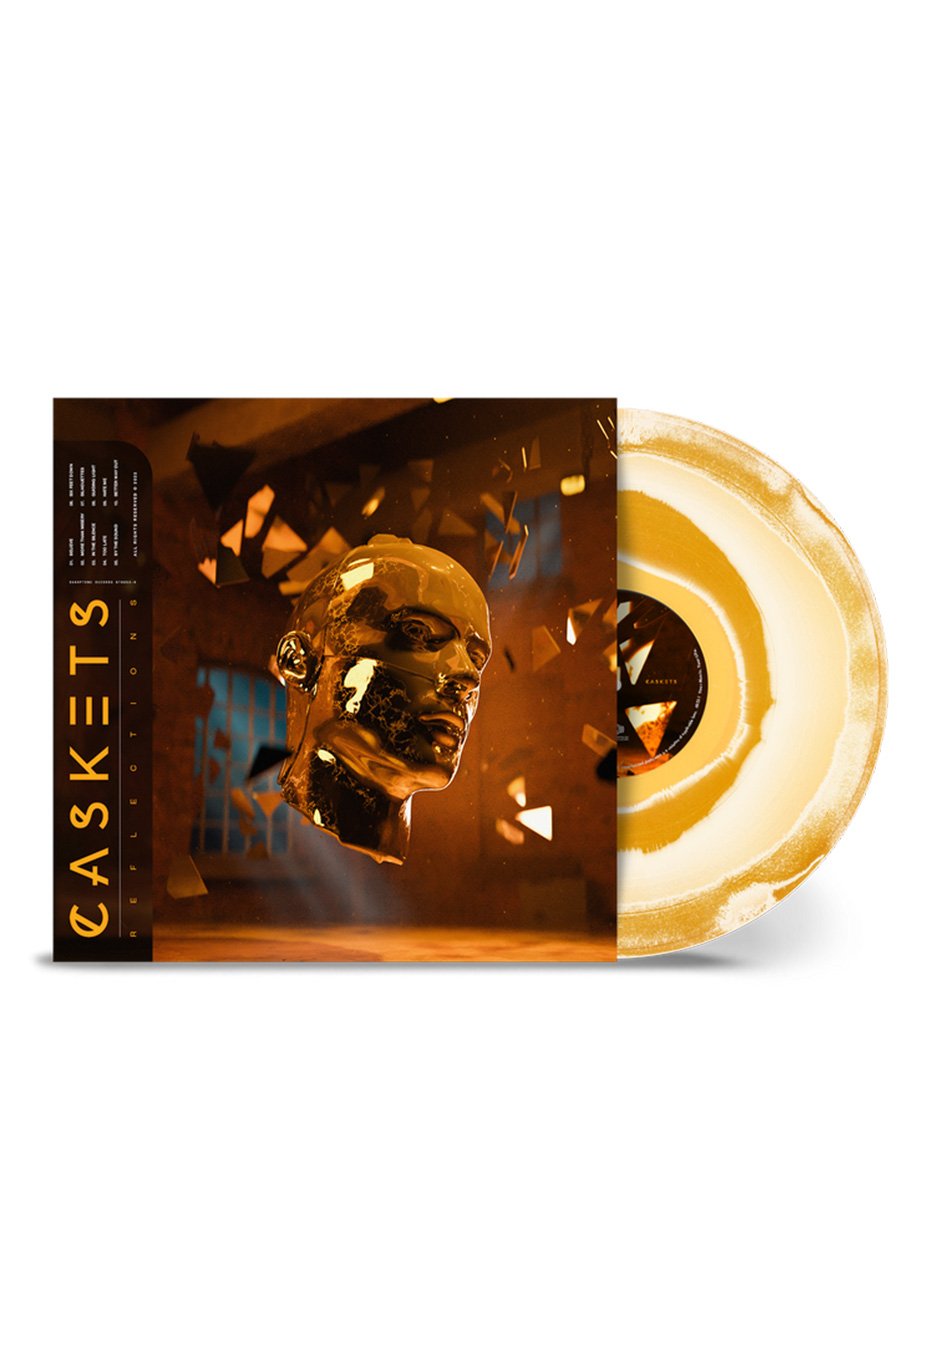 Caskets - Reflections Ltd. Orange/White Corona - Colored Vinyl